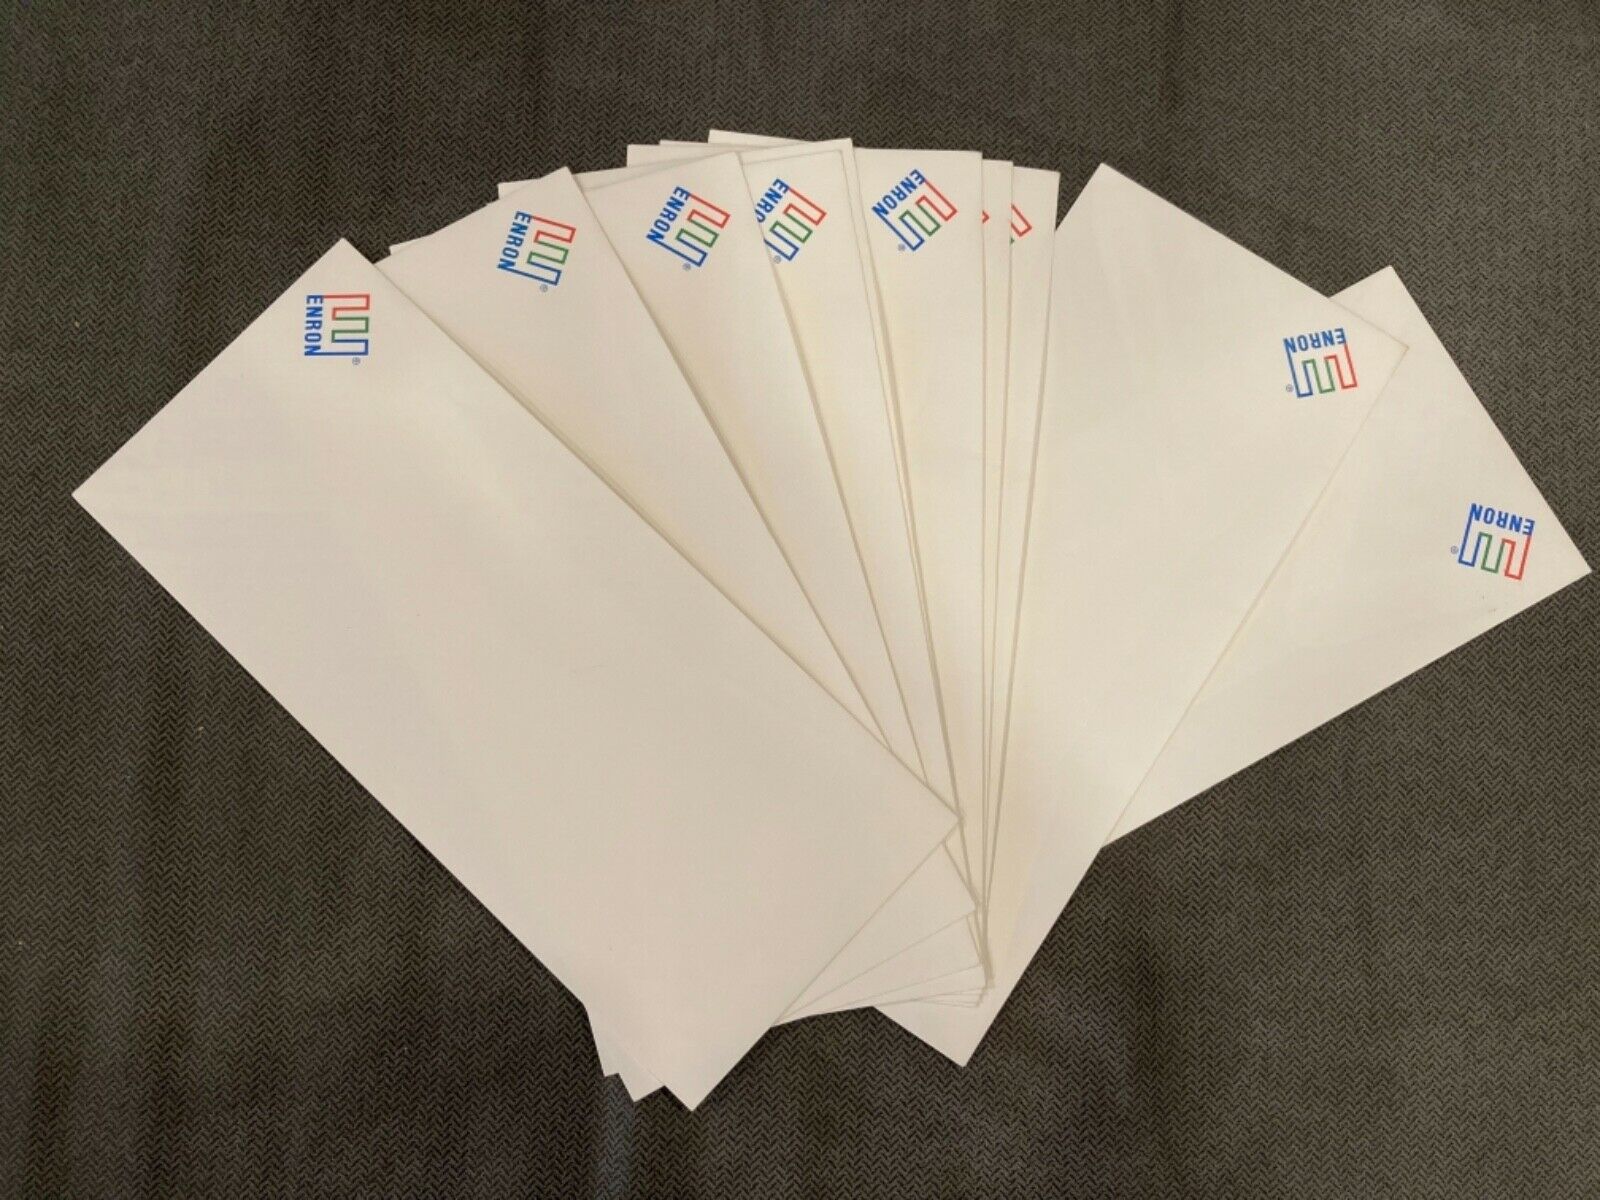 Lot Of 10 Authentic Enron Envelopes, Good Condition